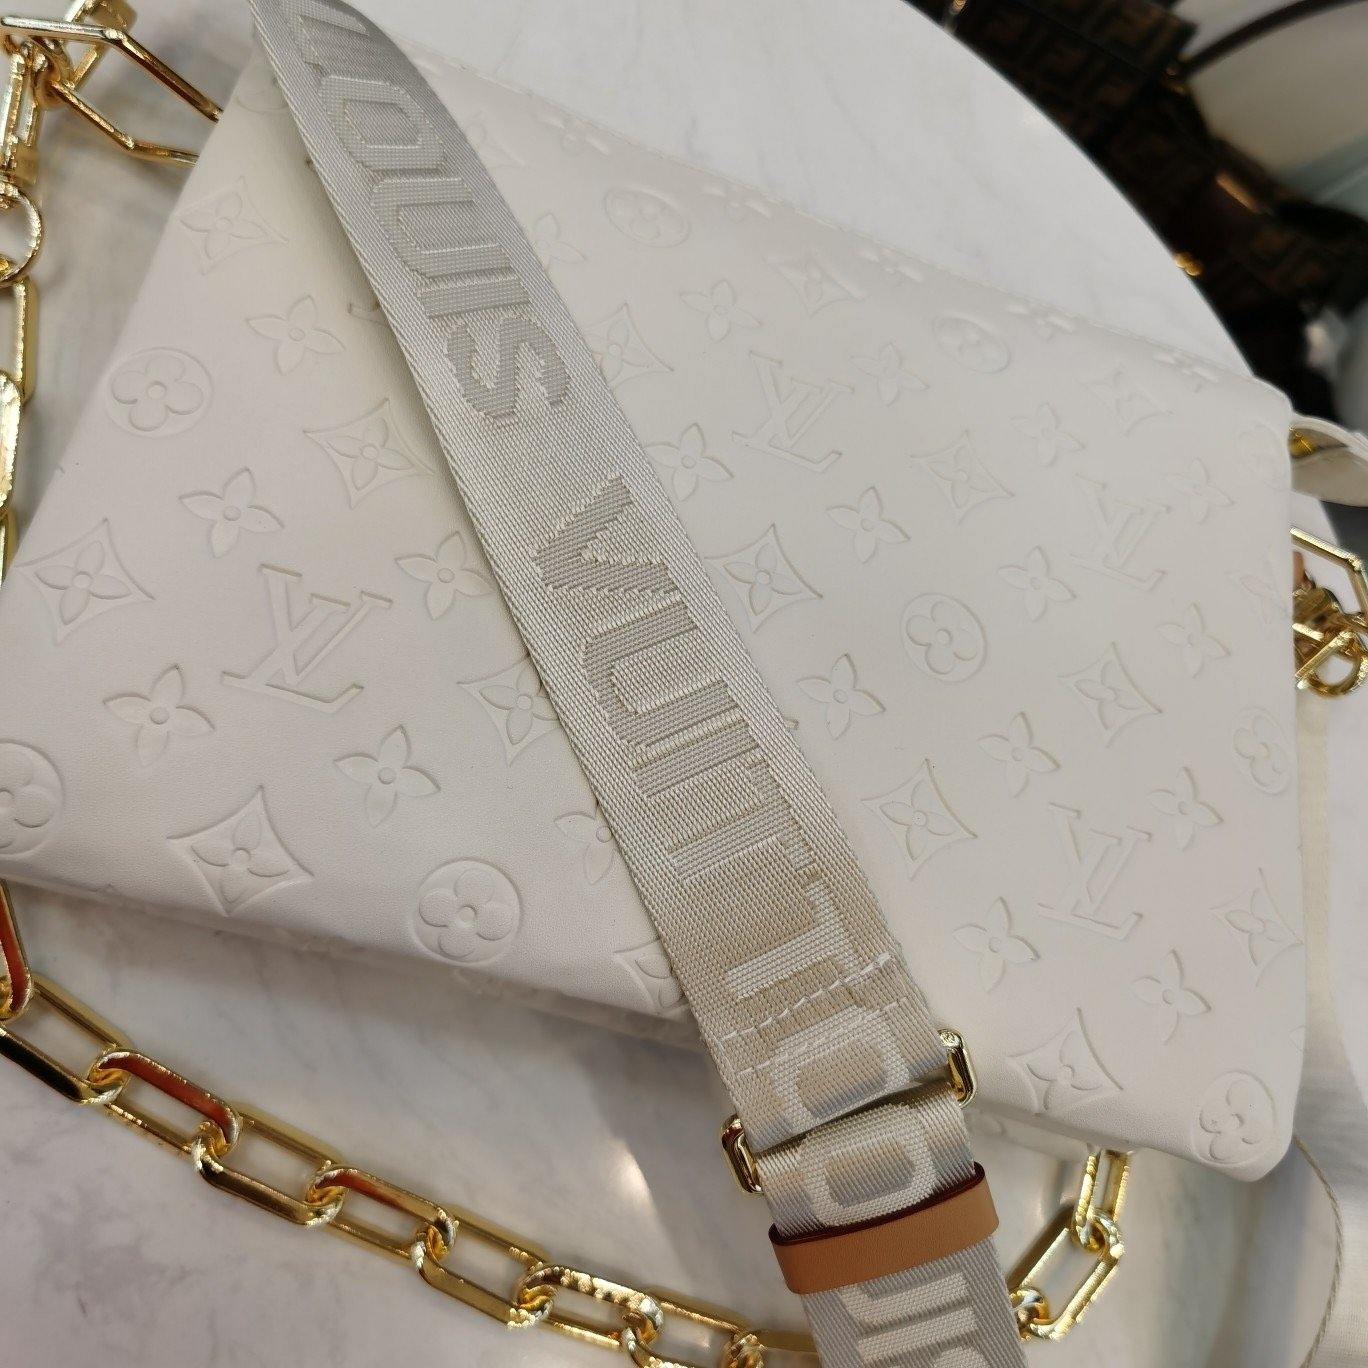 Coussin PM bag Louis Vuitton – KJ VIPS